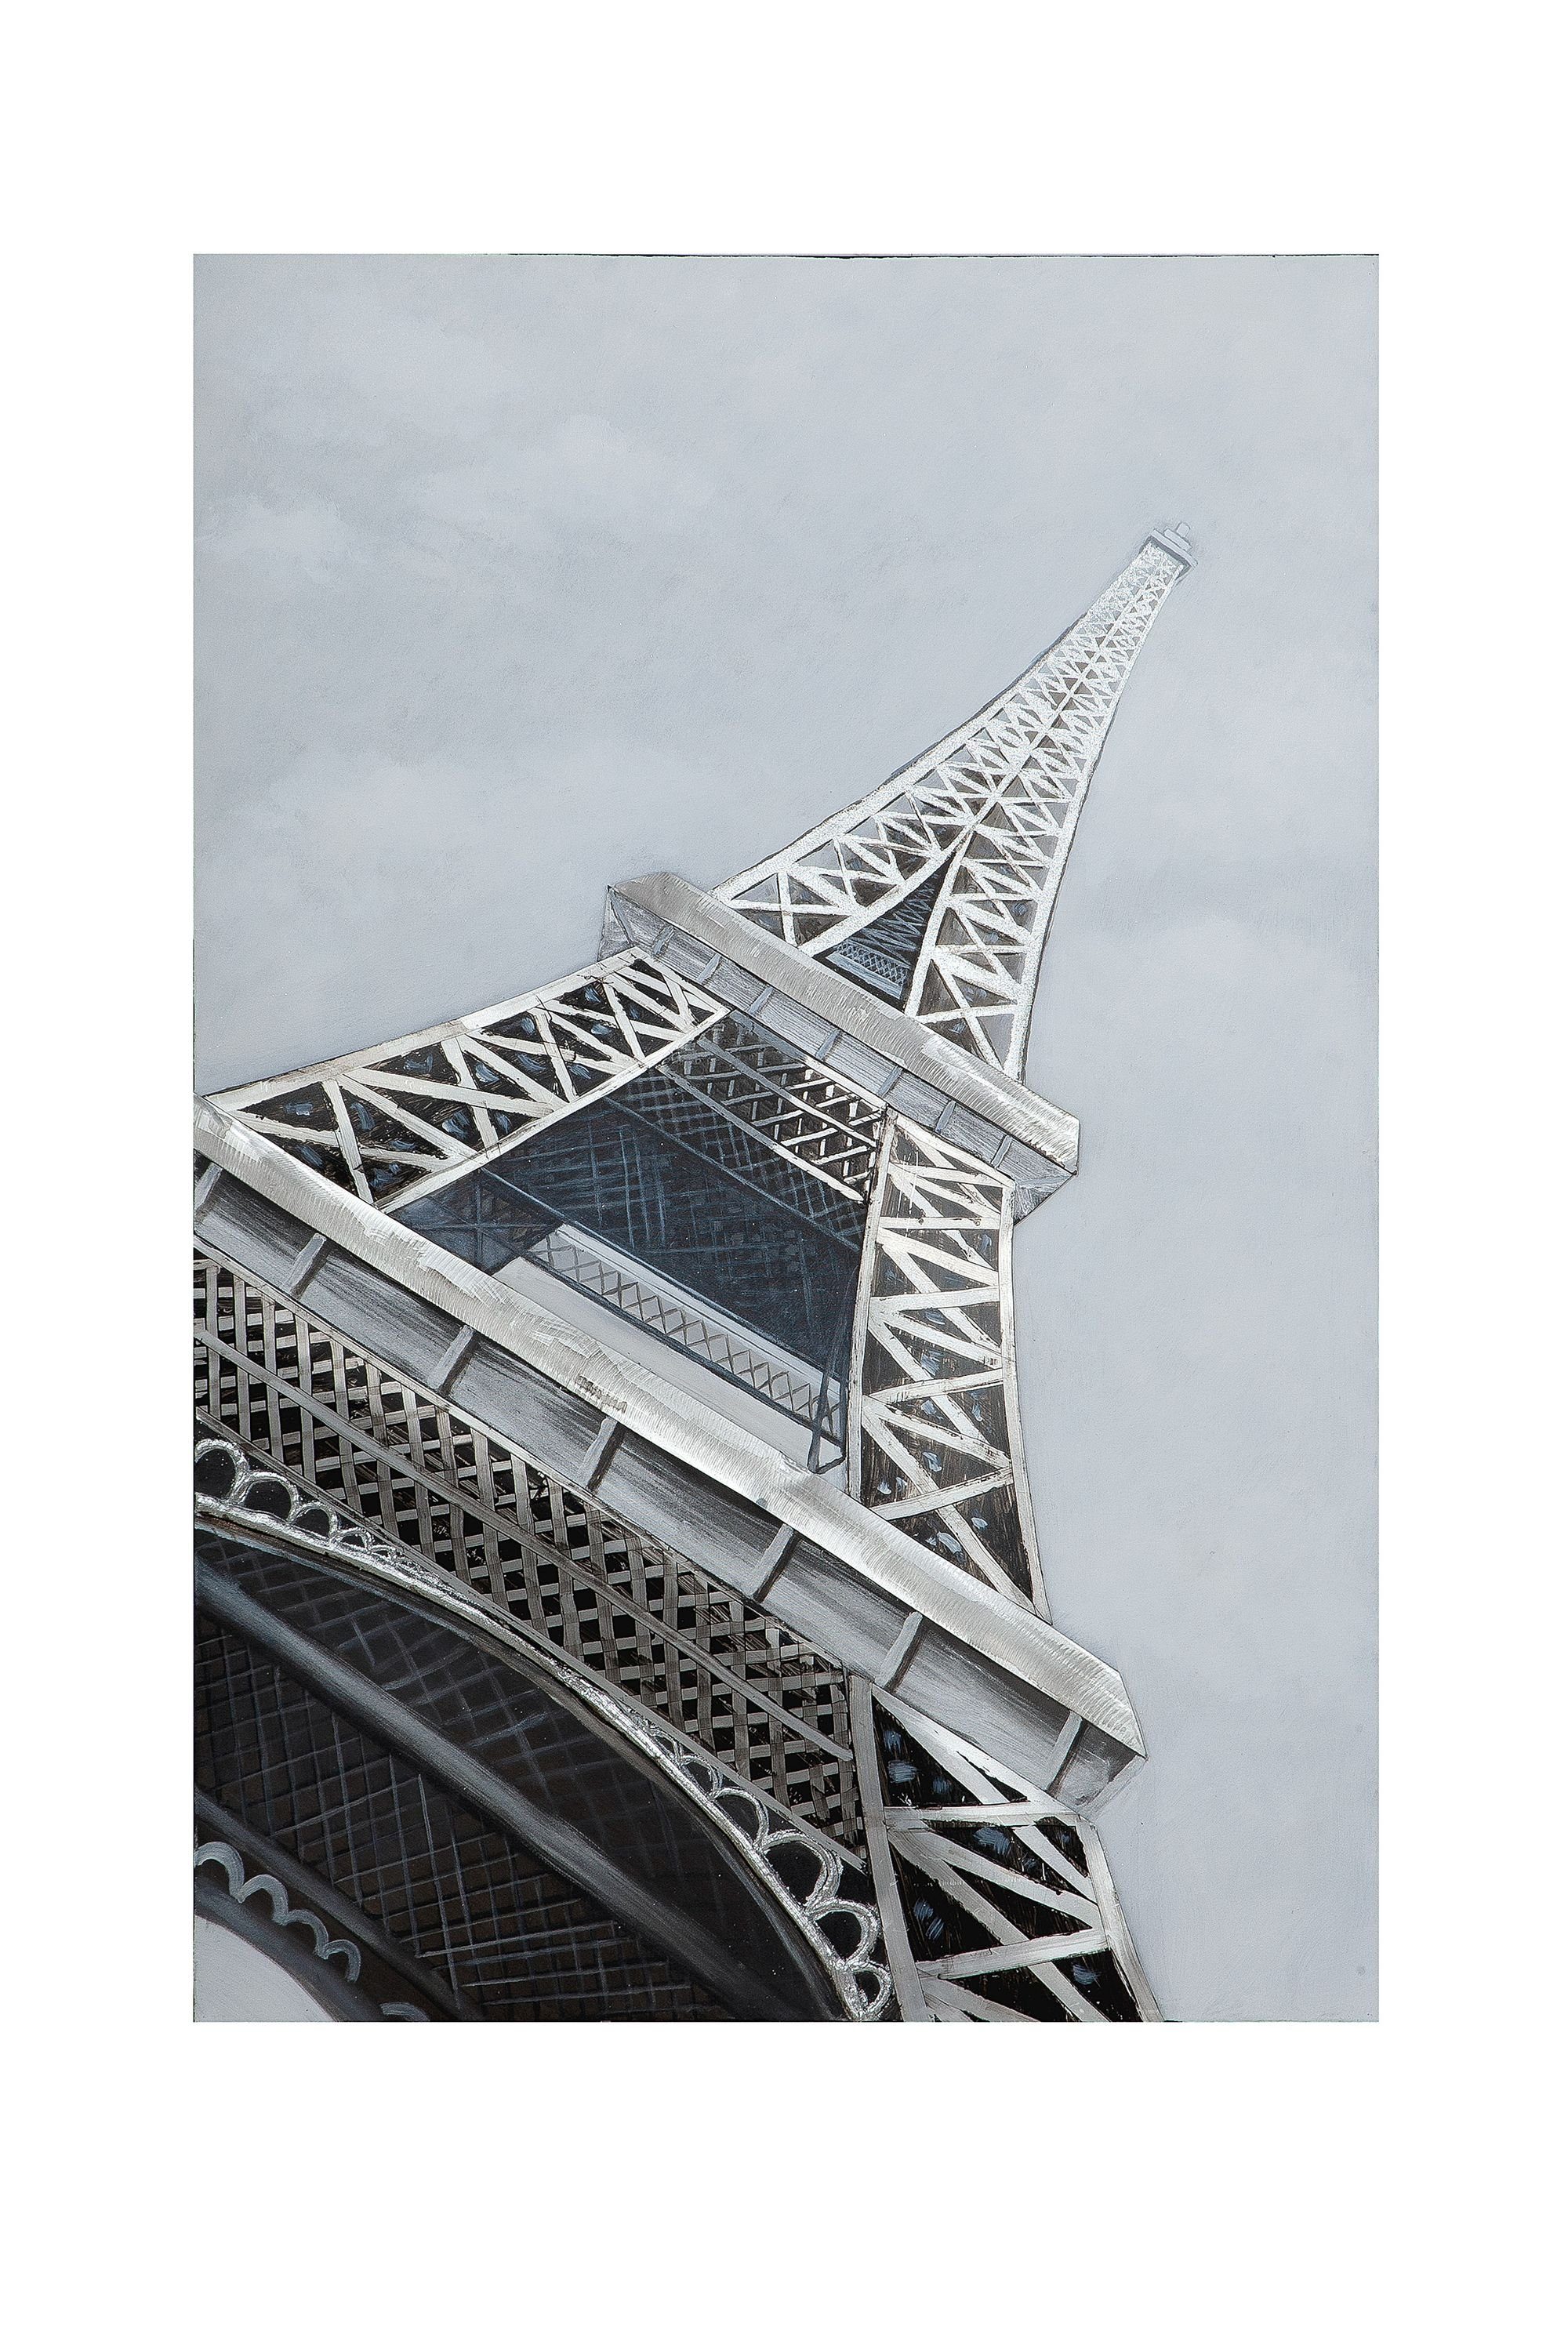 x - Bild grau-silber Eiffelturm B. 120cm - Bild H. 80cm 3D GILDE GILDE